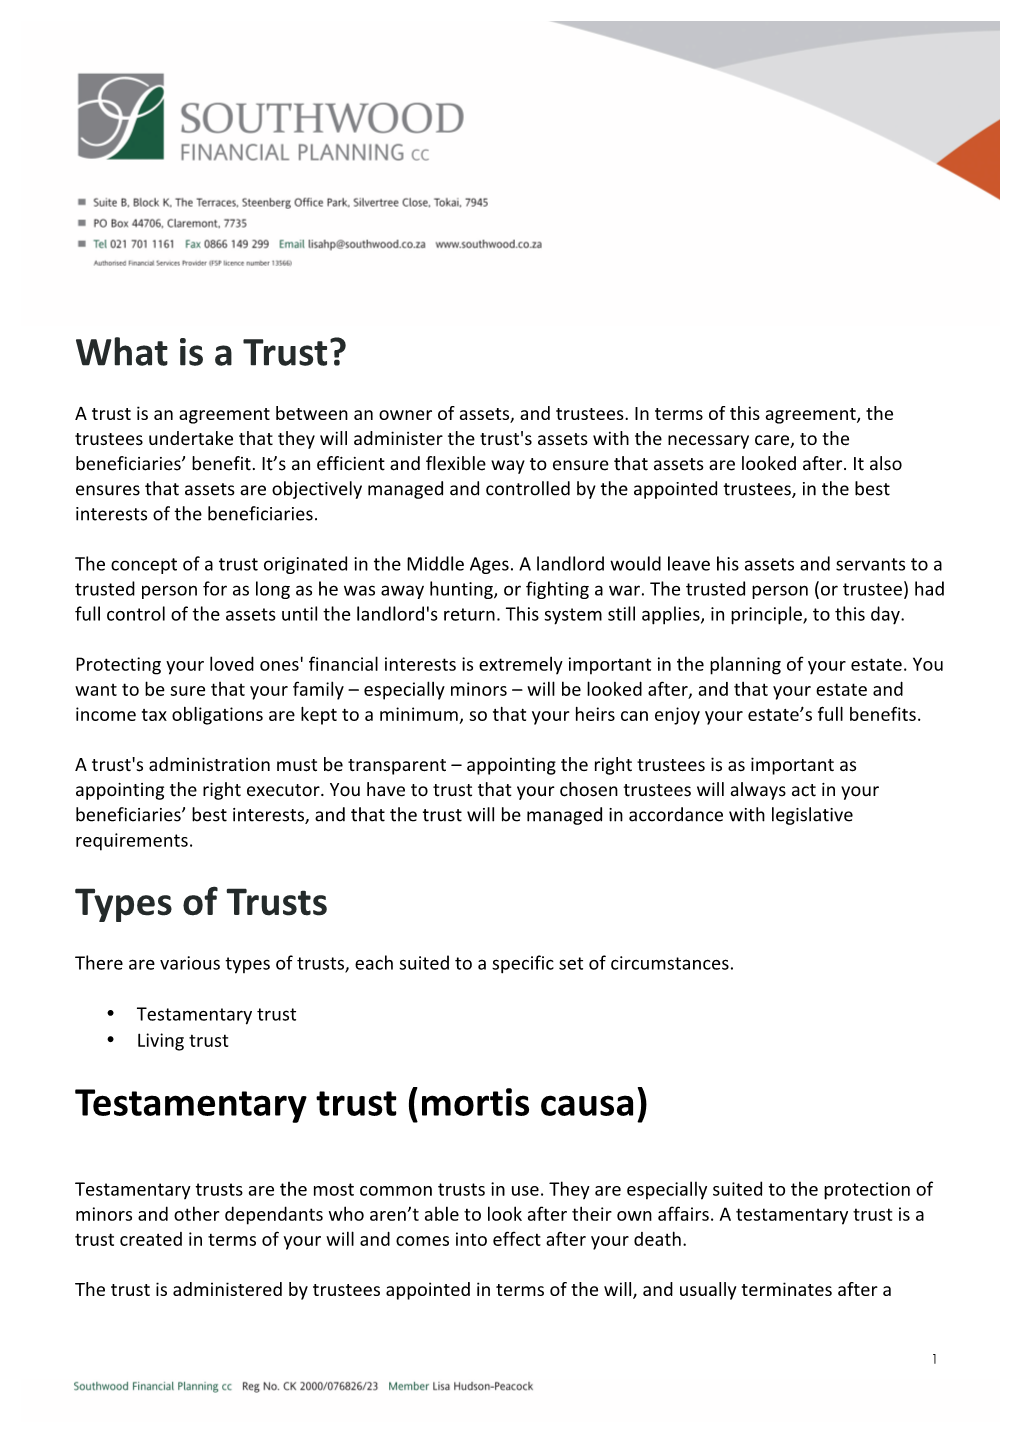 Types of Trusts Testamentary Trust